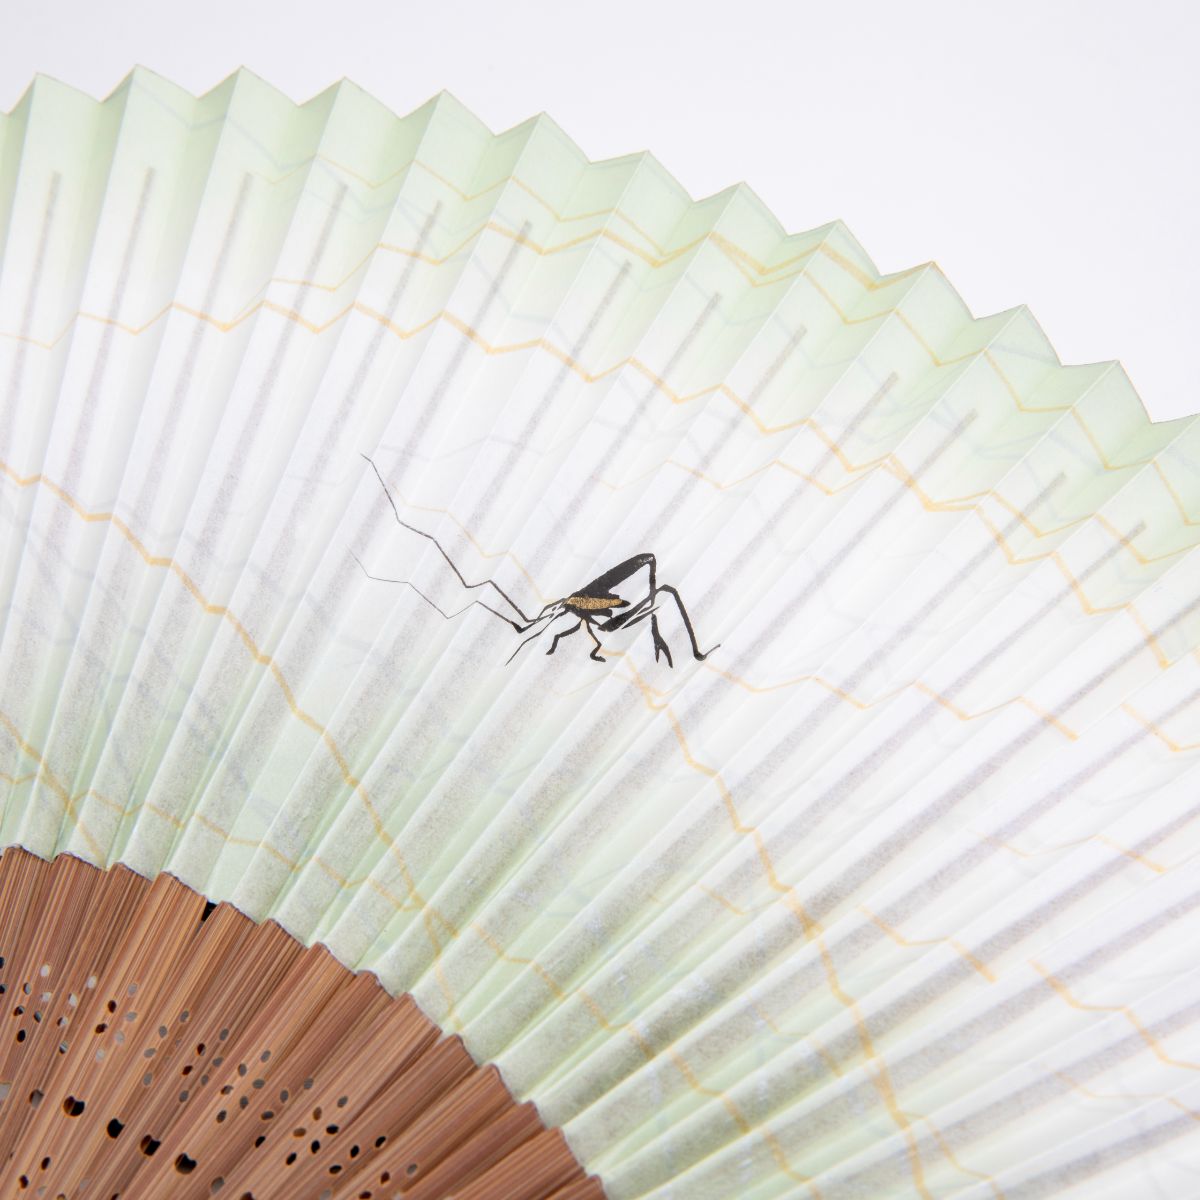 Traditional Japanese Sensu Hand Fan - Grasshopper